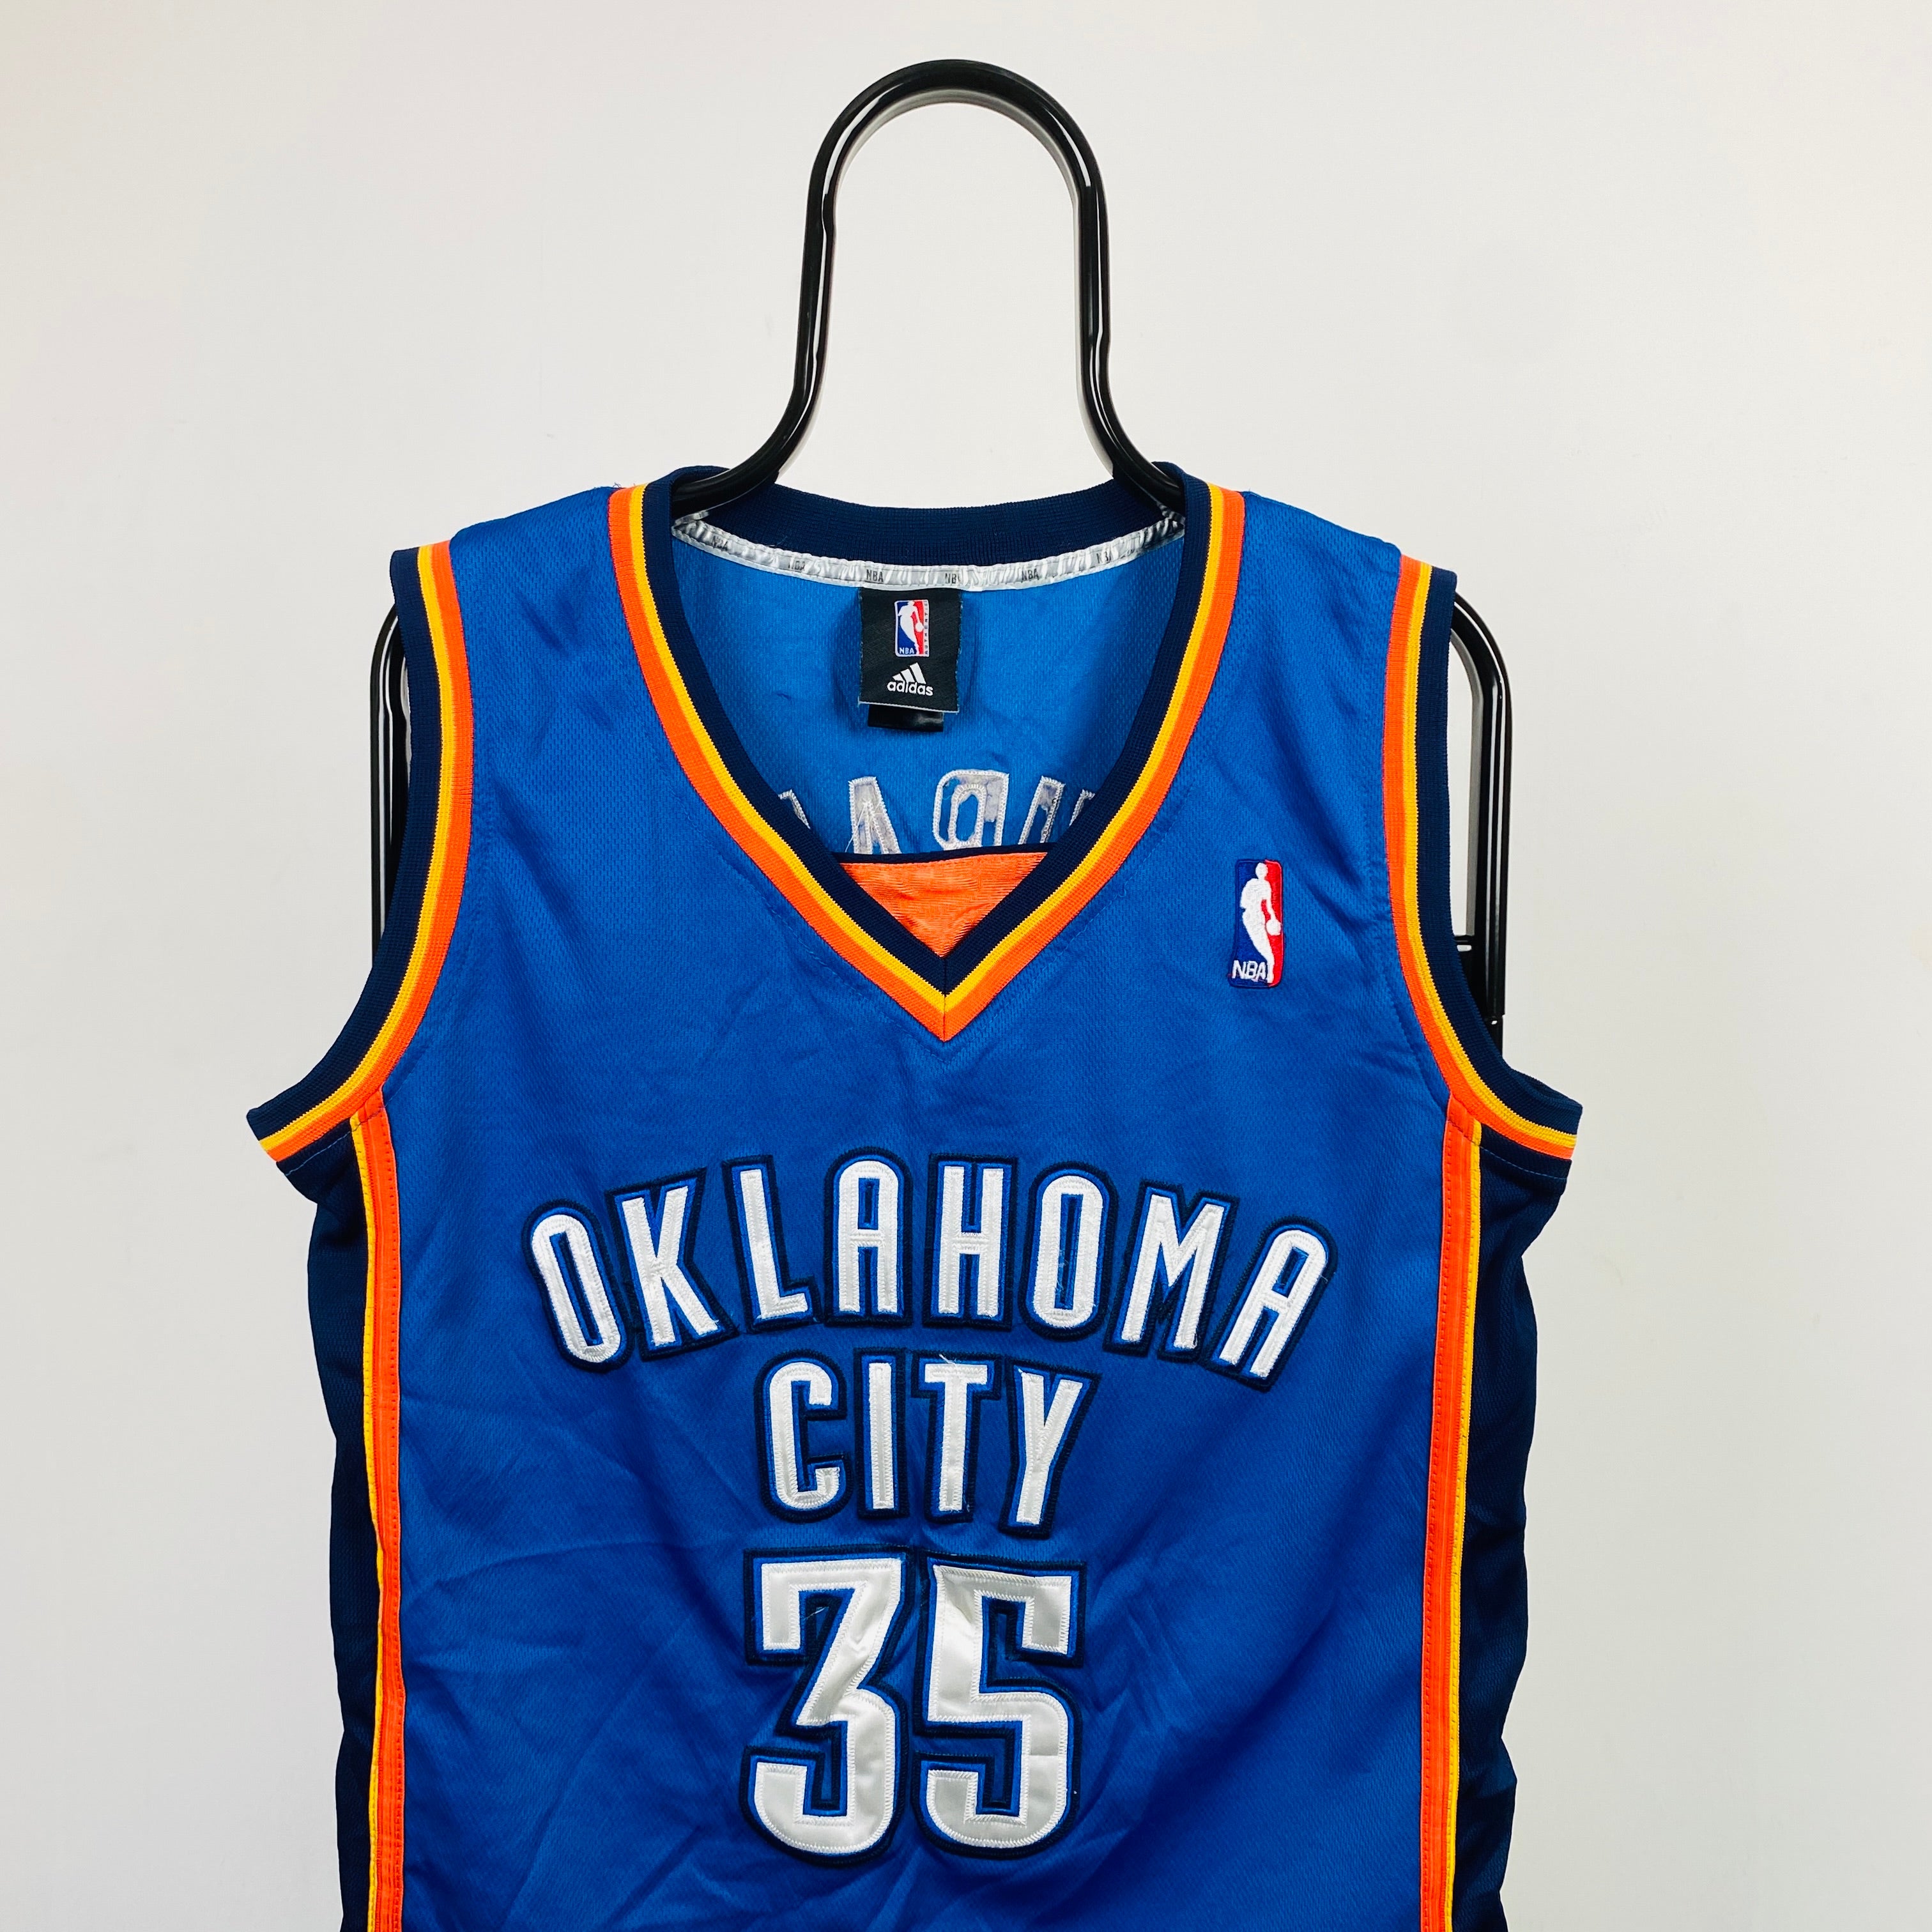 Retro Oklahoma City Durant Basketball Vest Jersey T-Shirt Blue Small